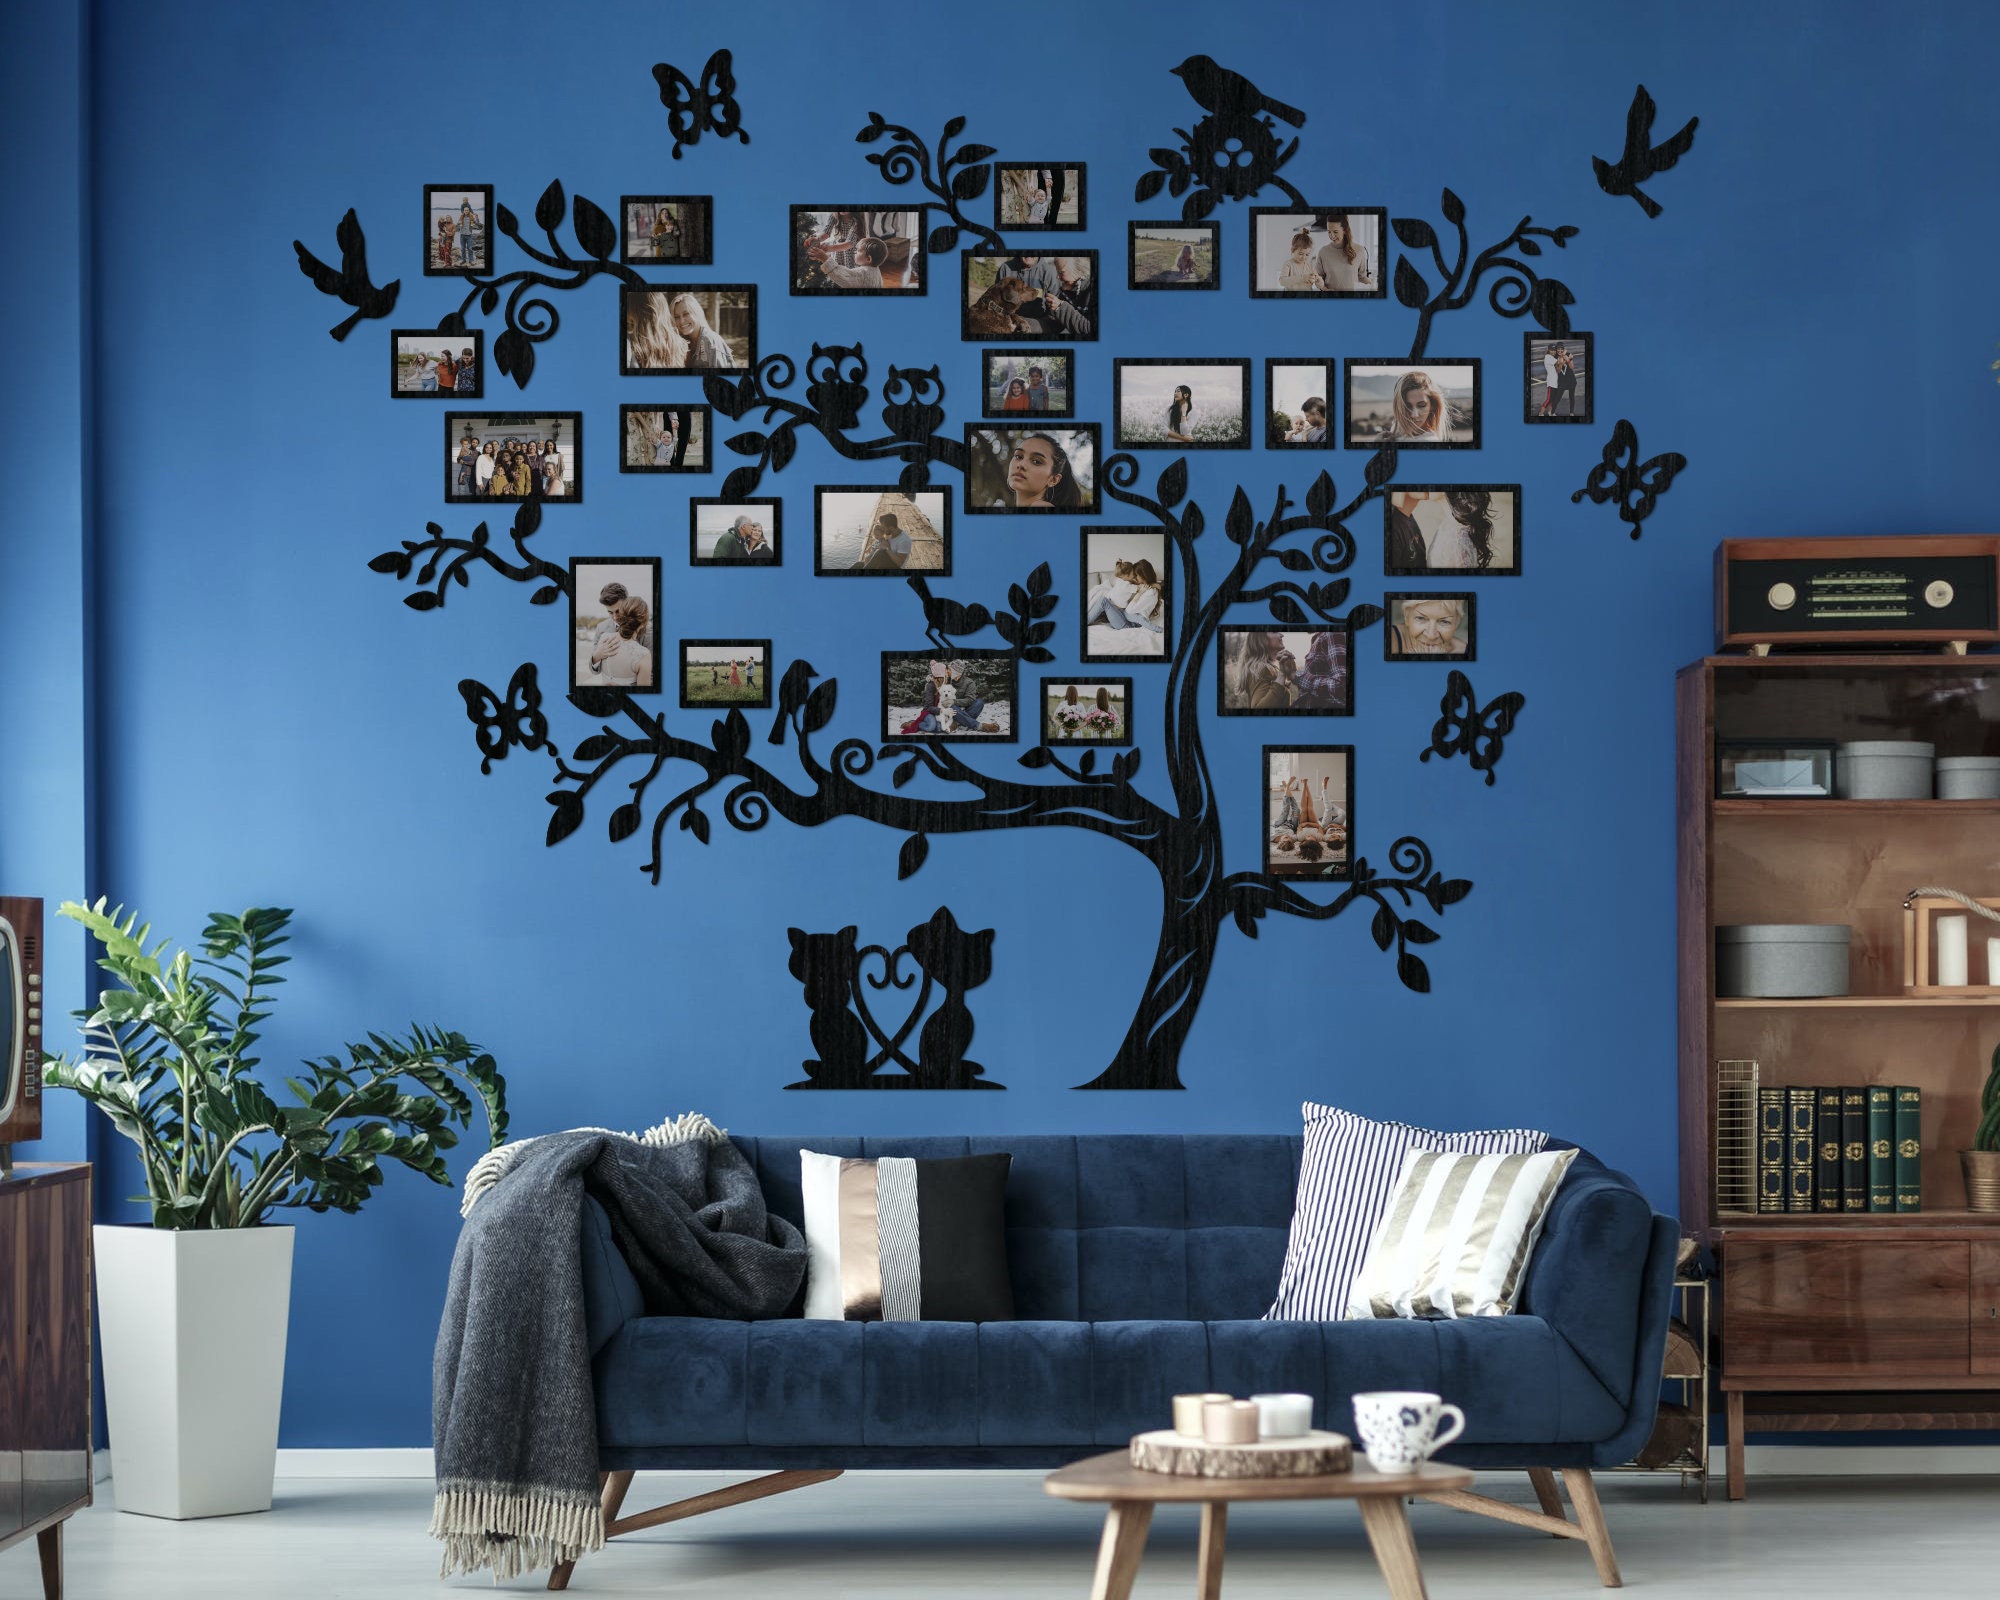 Wall ART FAMILY TREE / Weding gift ideas /Living room decor ideas